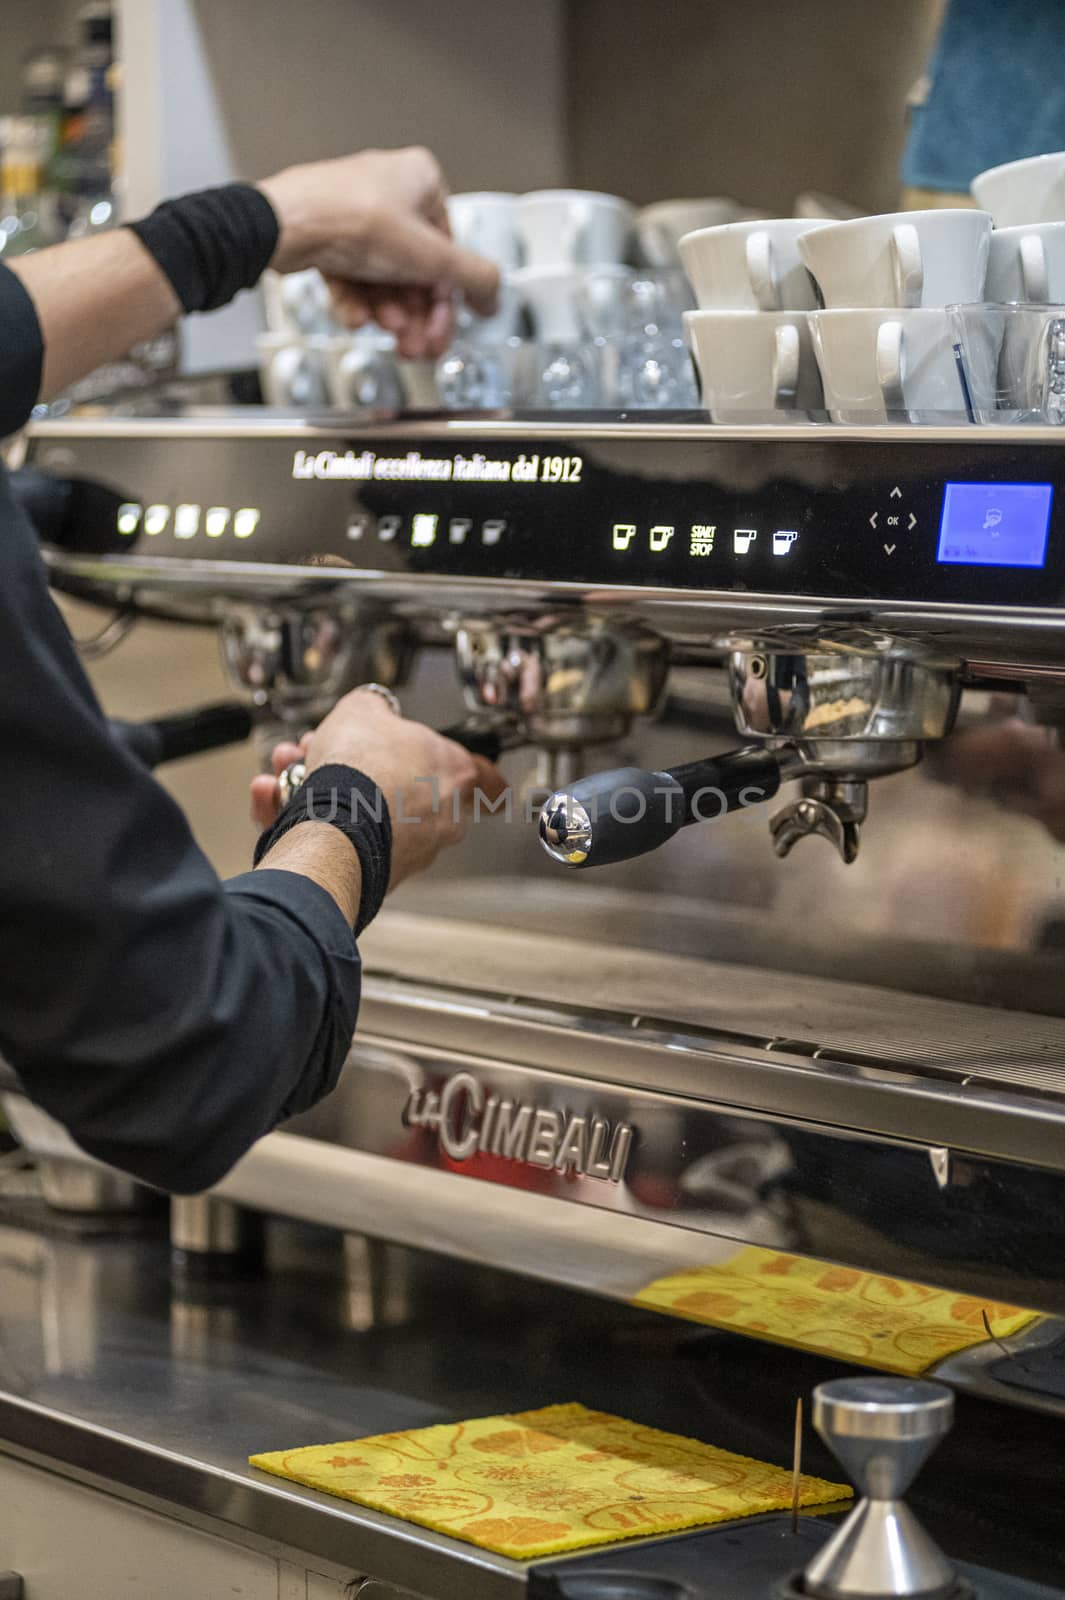 barista preparing coffee at the machine by carfedeph